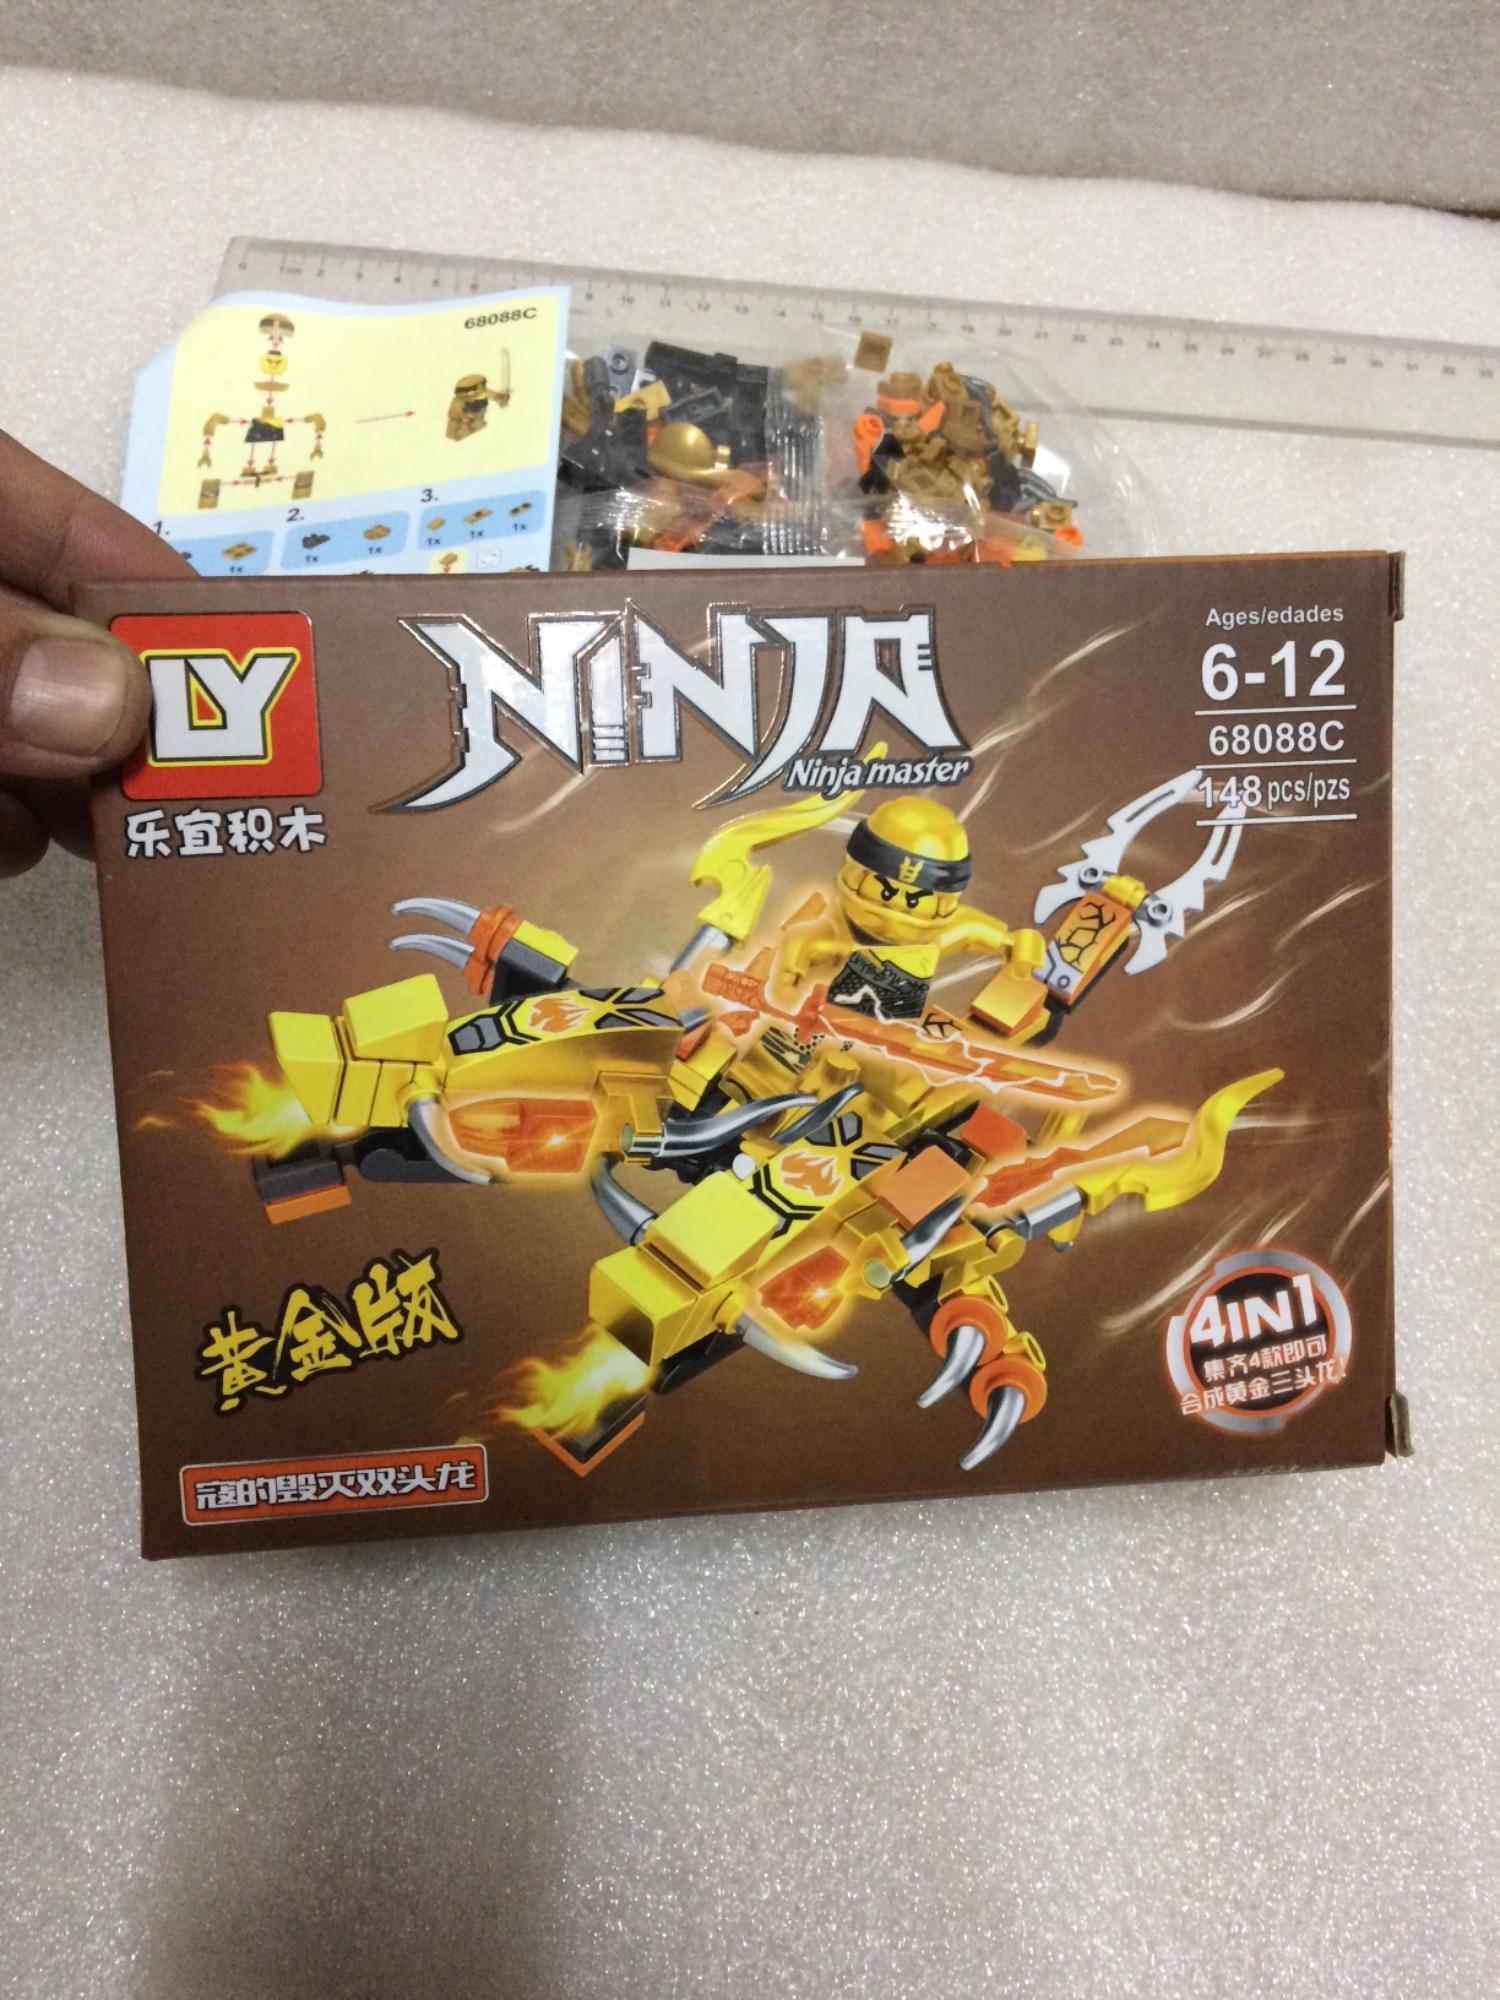 Lego lắp ghép SIÊU NINJA RỒNG (ninja master) model 68088C, 148 chi tiết